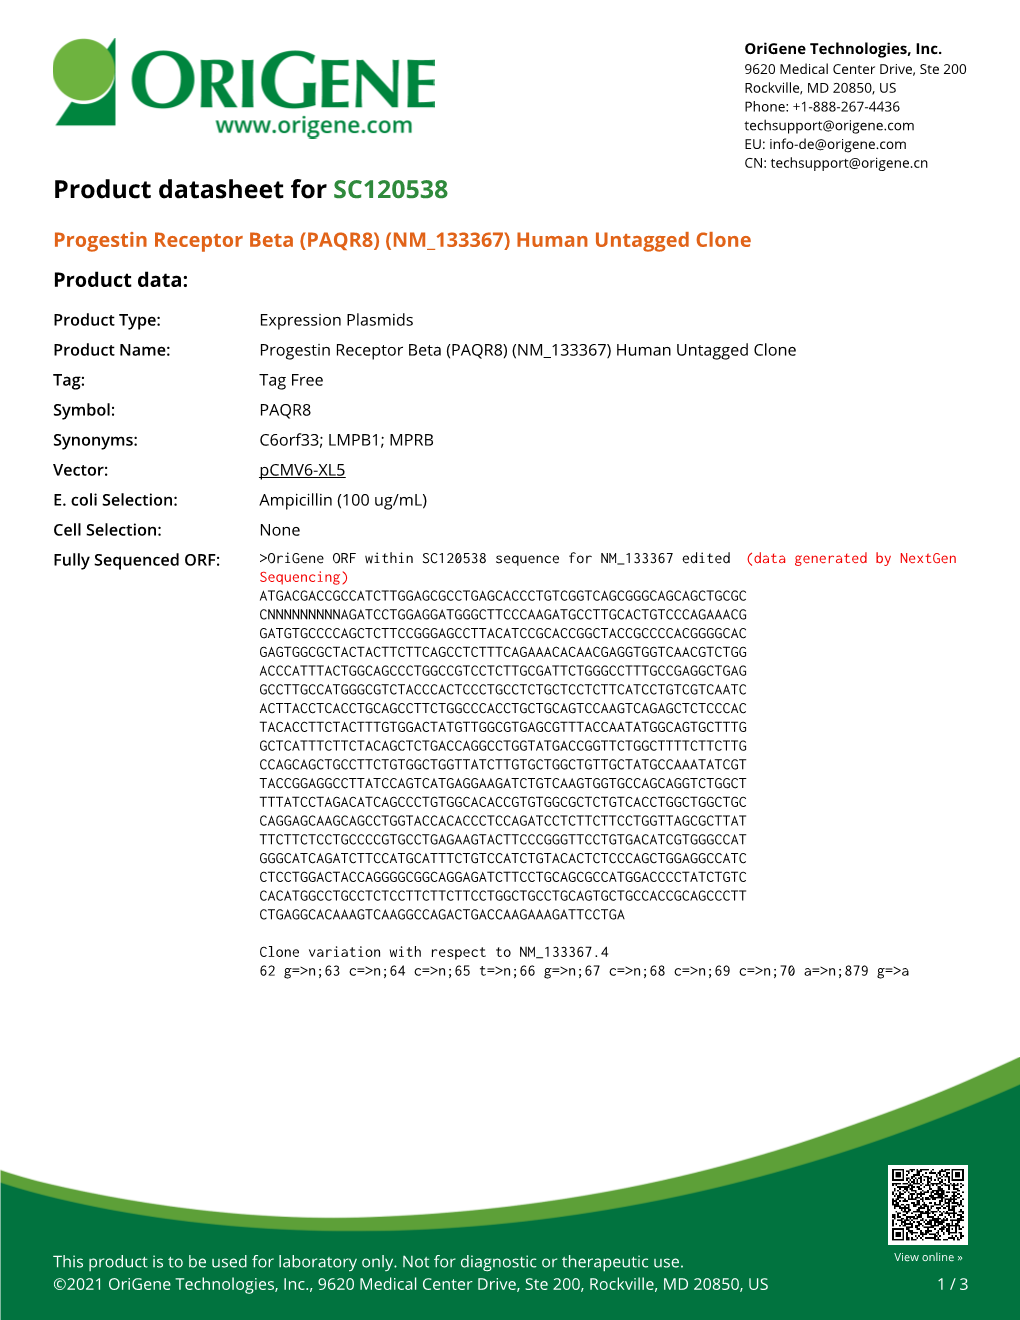 Progestin Receptor Beta (PAQR8) (NM 133367) Human Untagged Clone Product Data